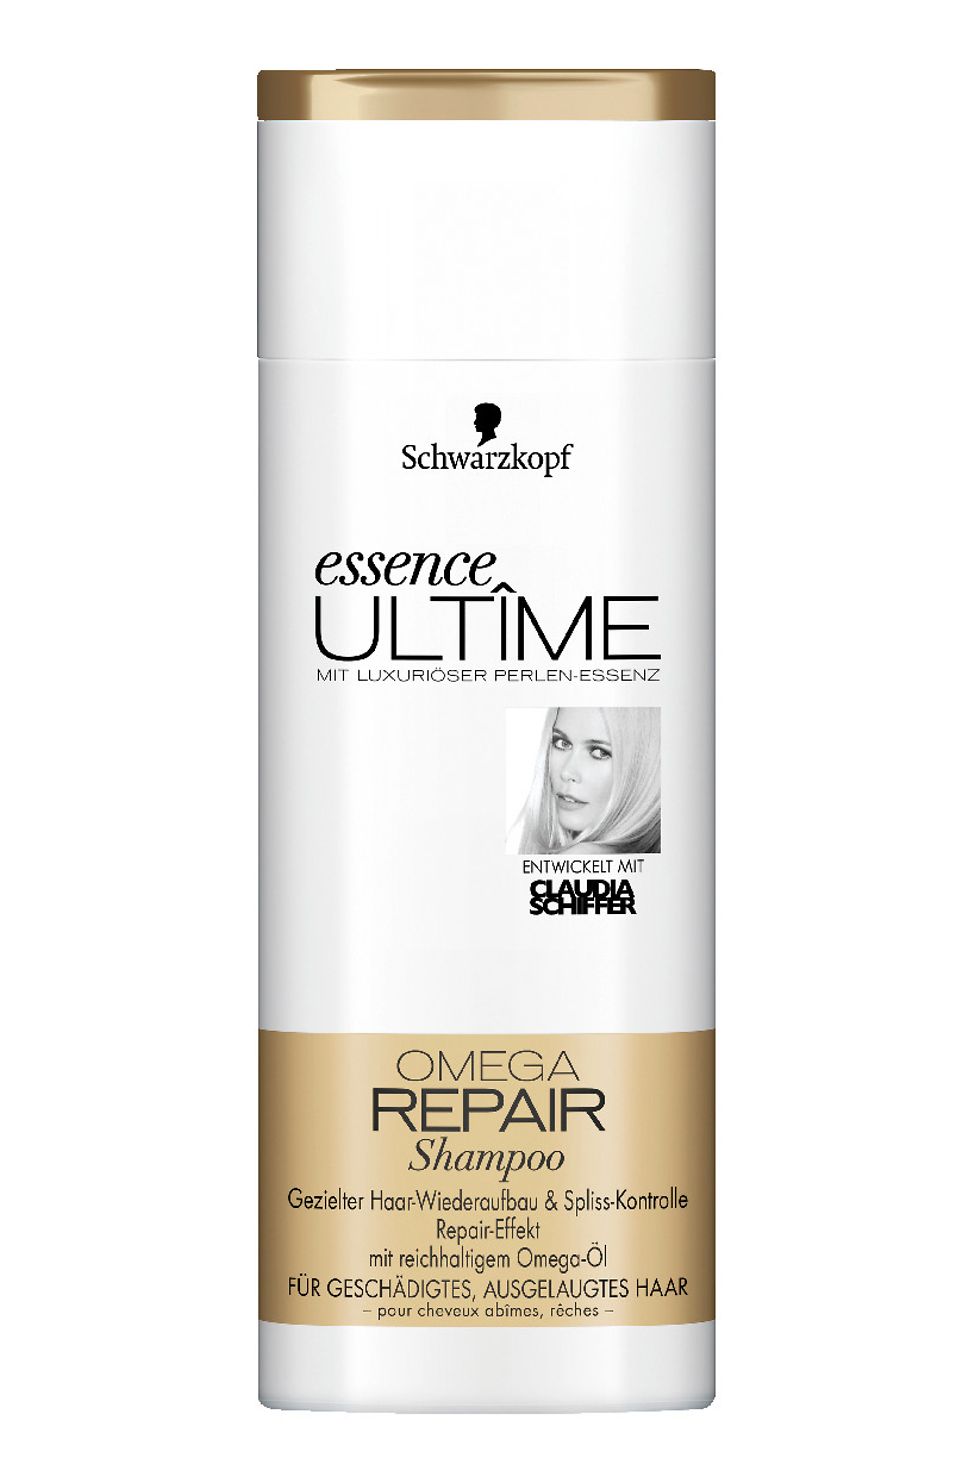 
essence Ultîme Omega Repair Shampoo